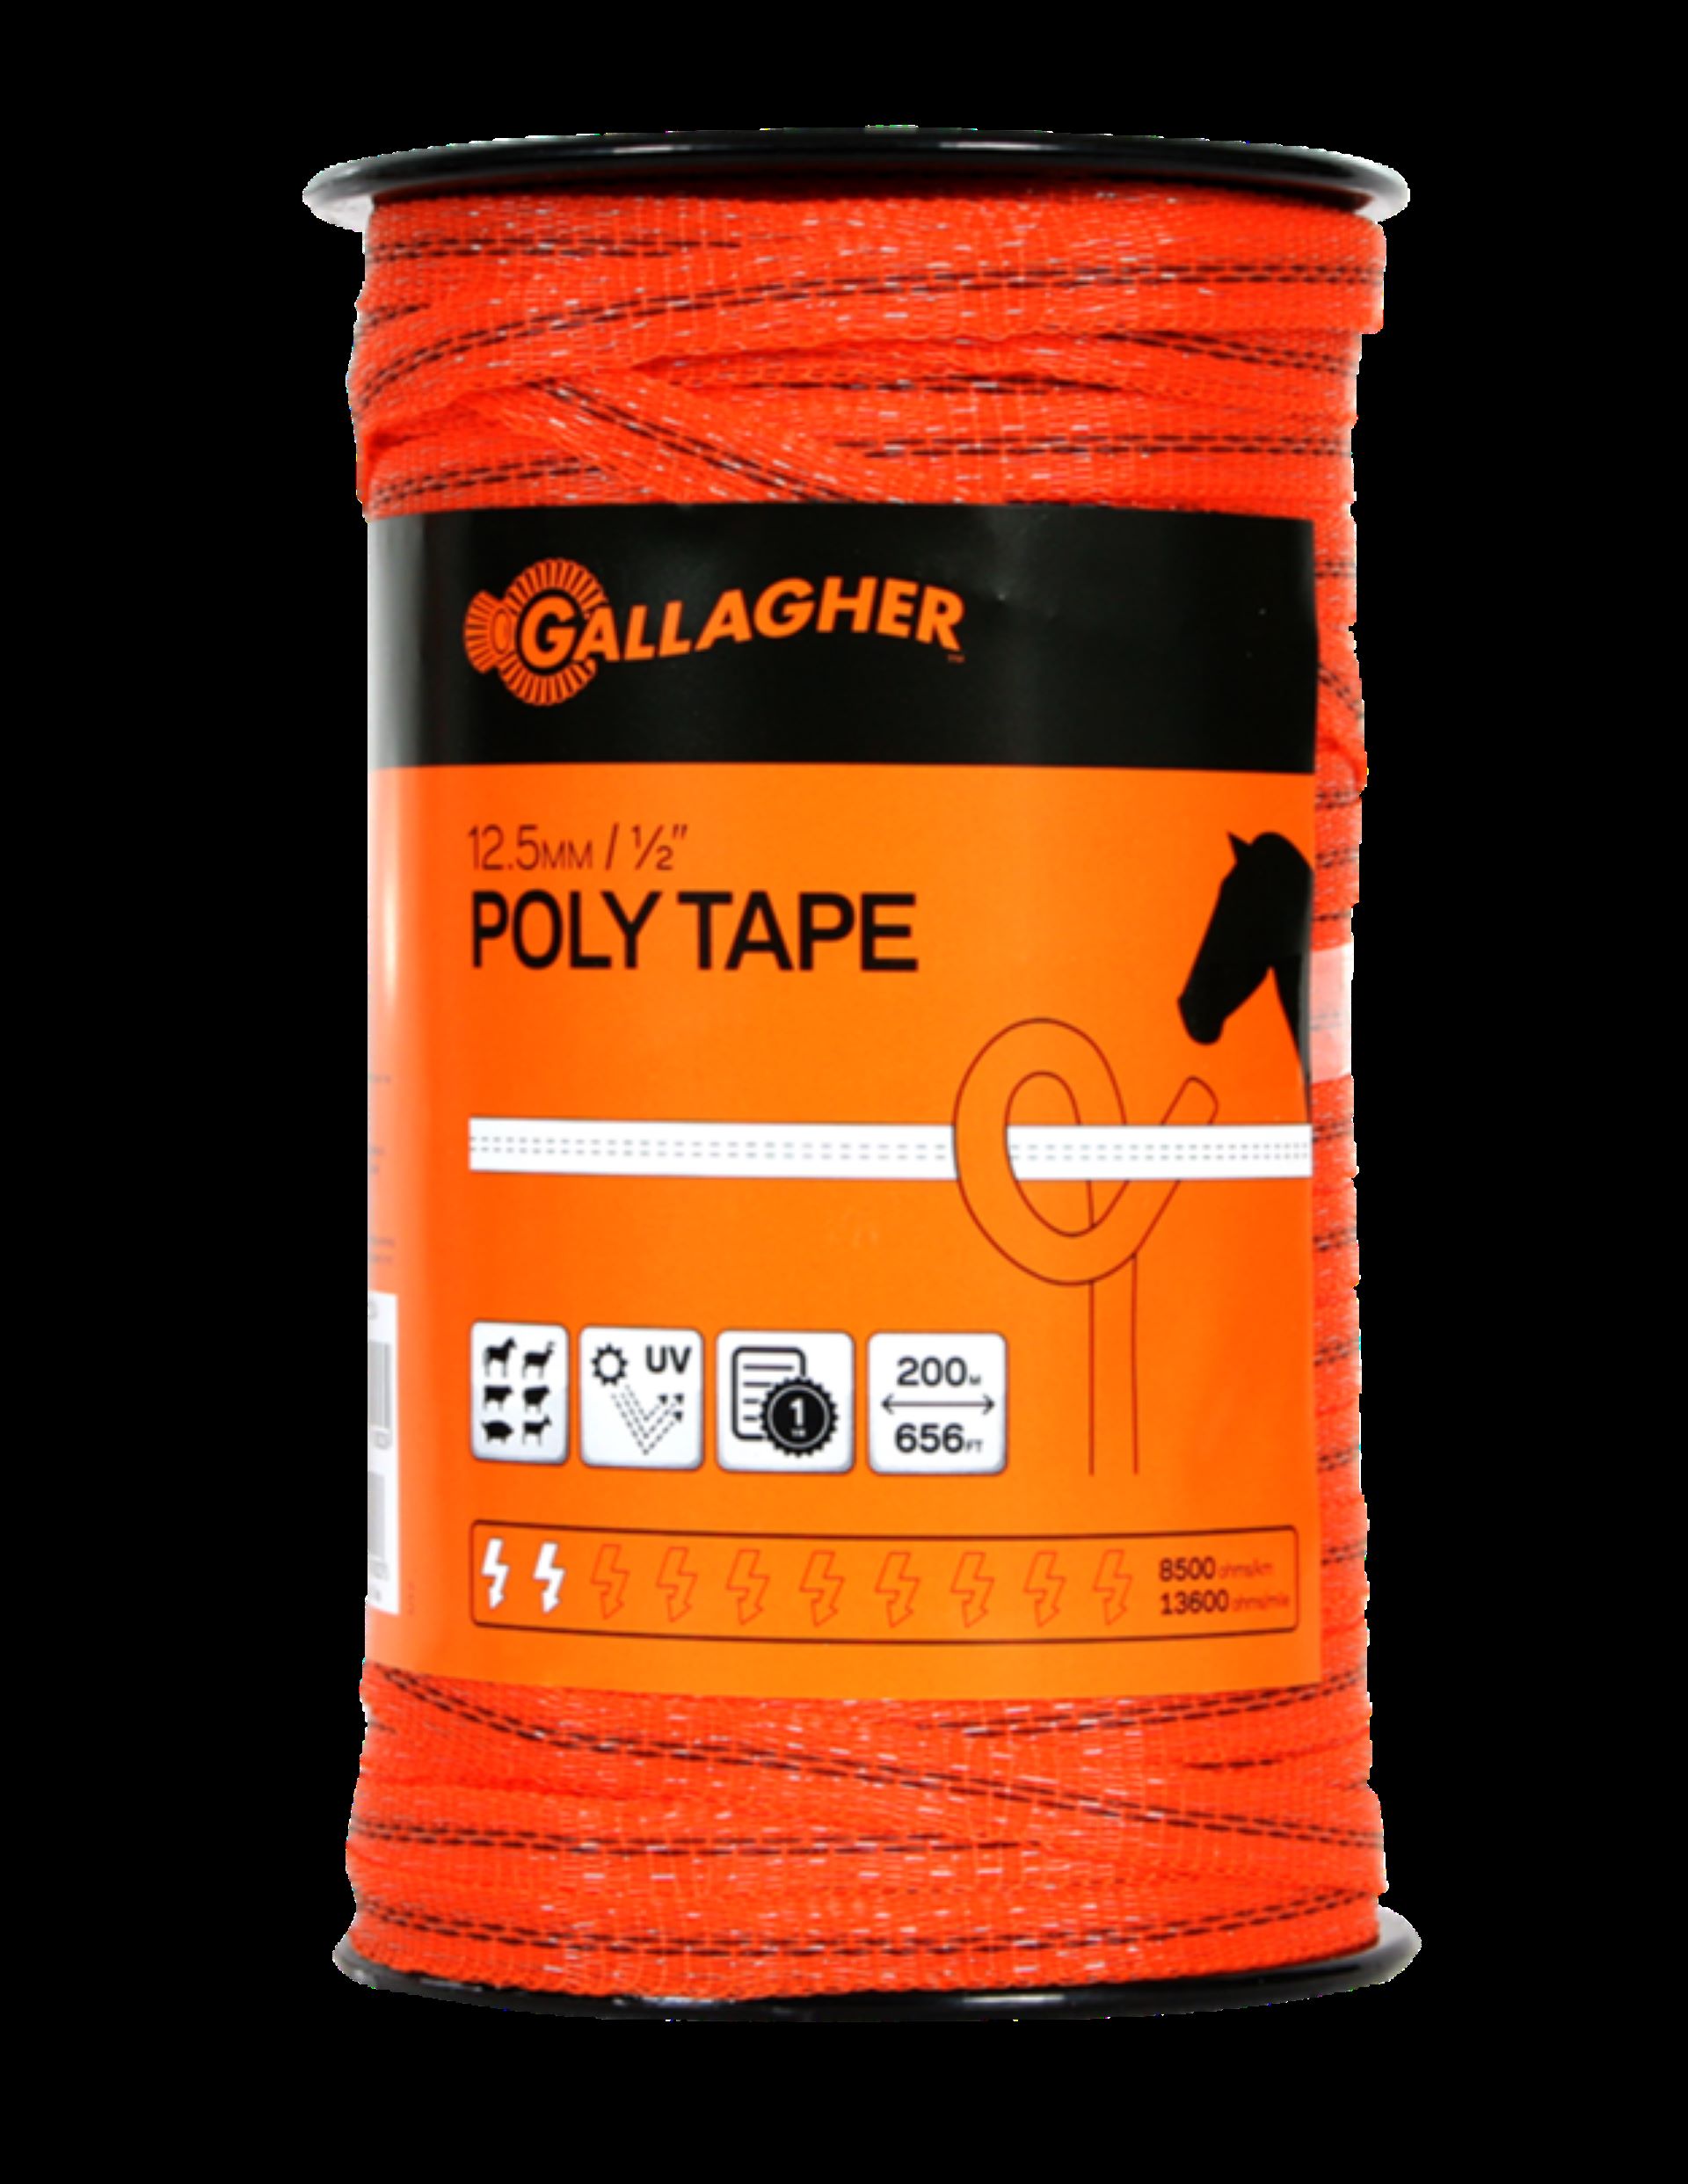 12.5mm Poly Tape - Orange